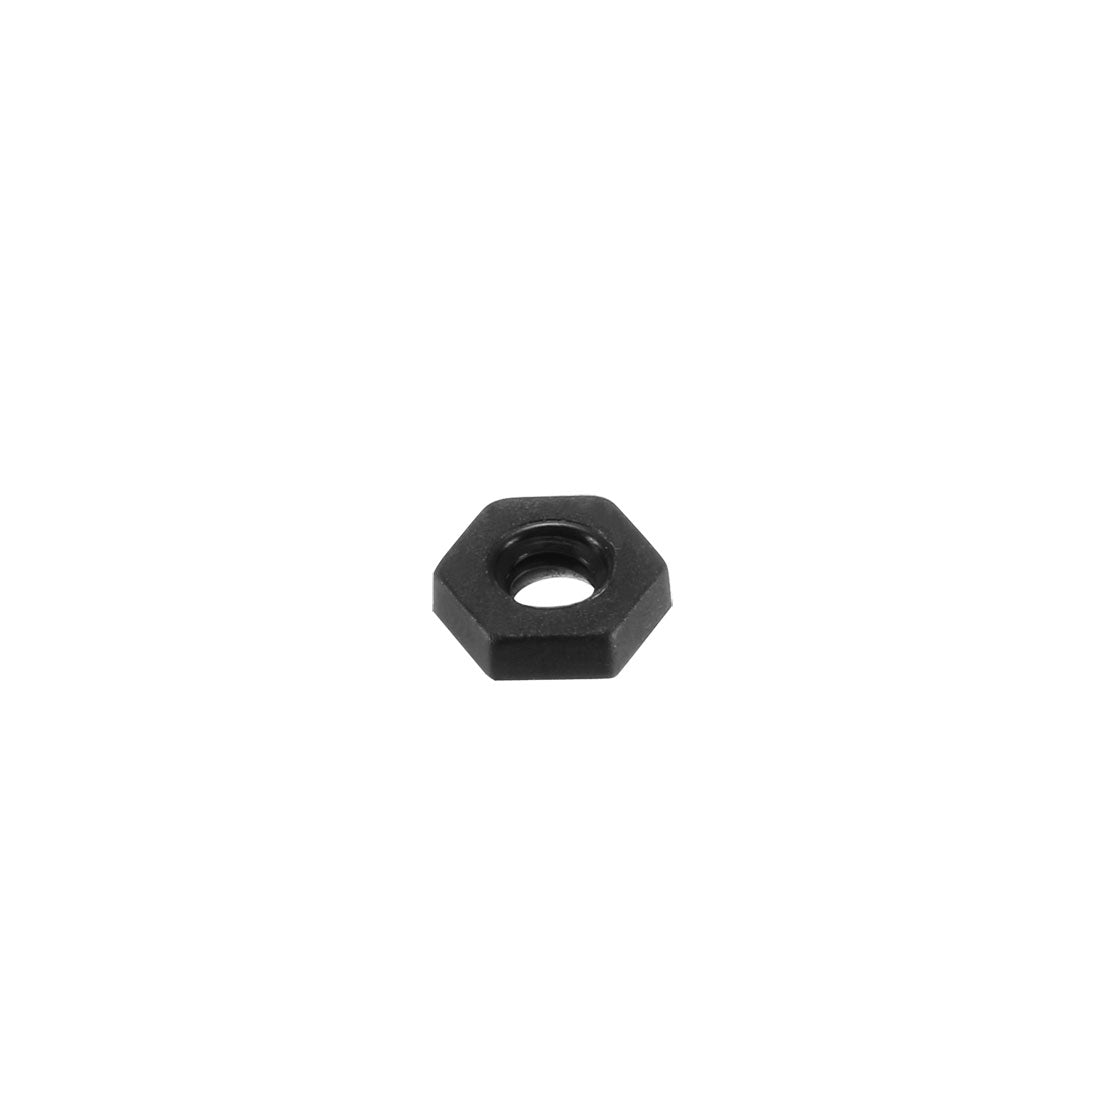 uxcell Uxcell Hex Nut, Metric Nylon M2x0.4mm Thread Hexagon Nuts Black150pcs